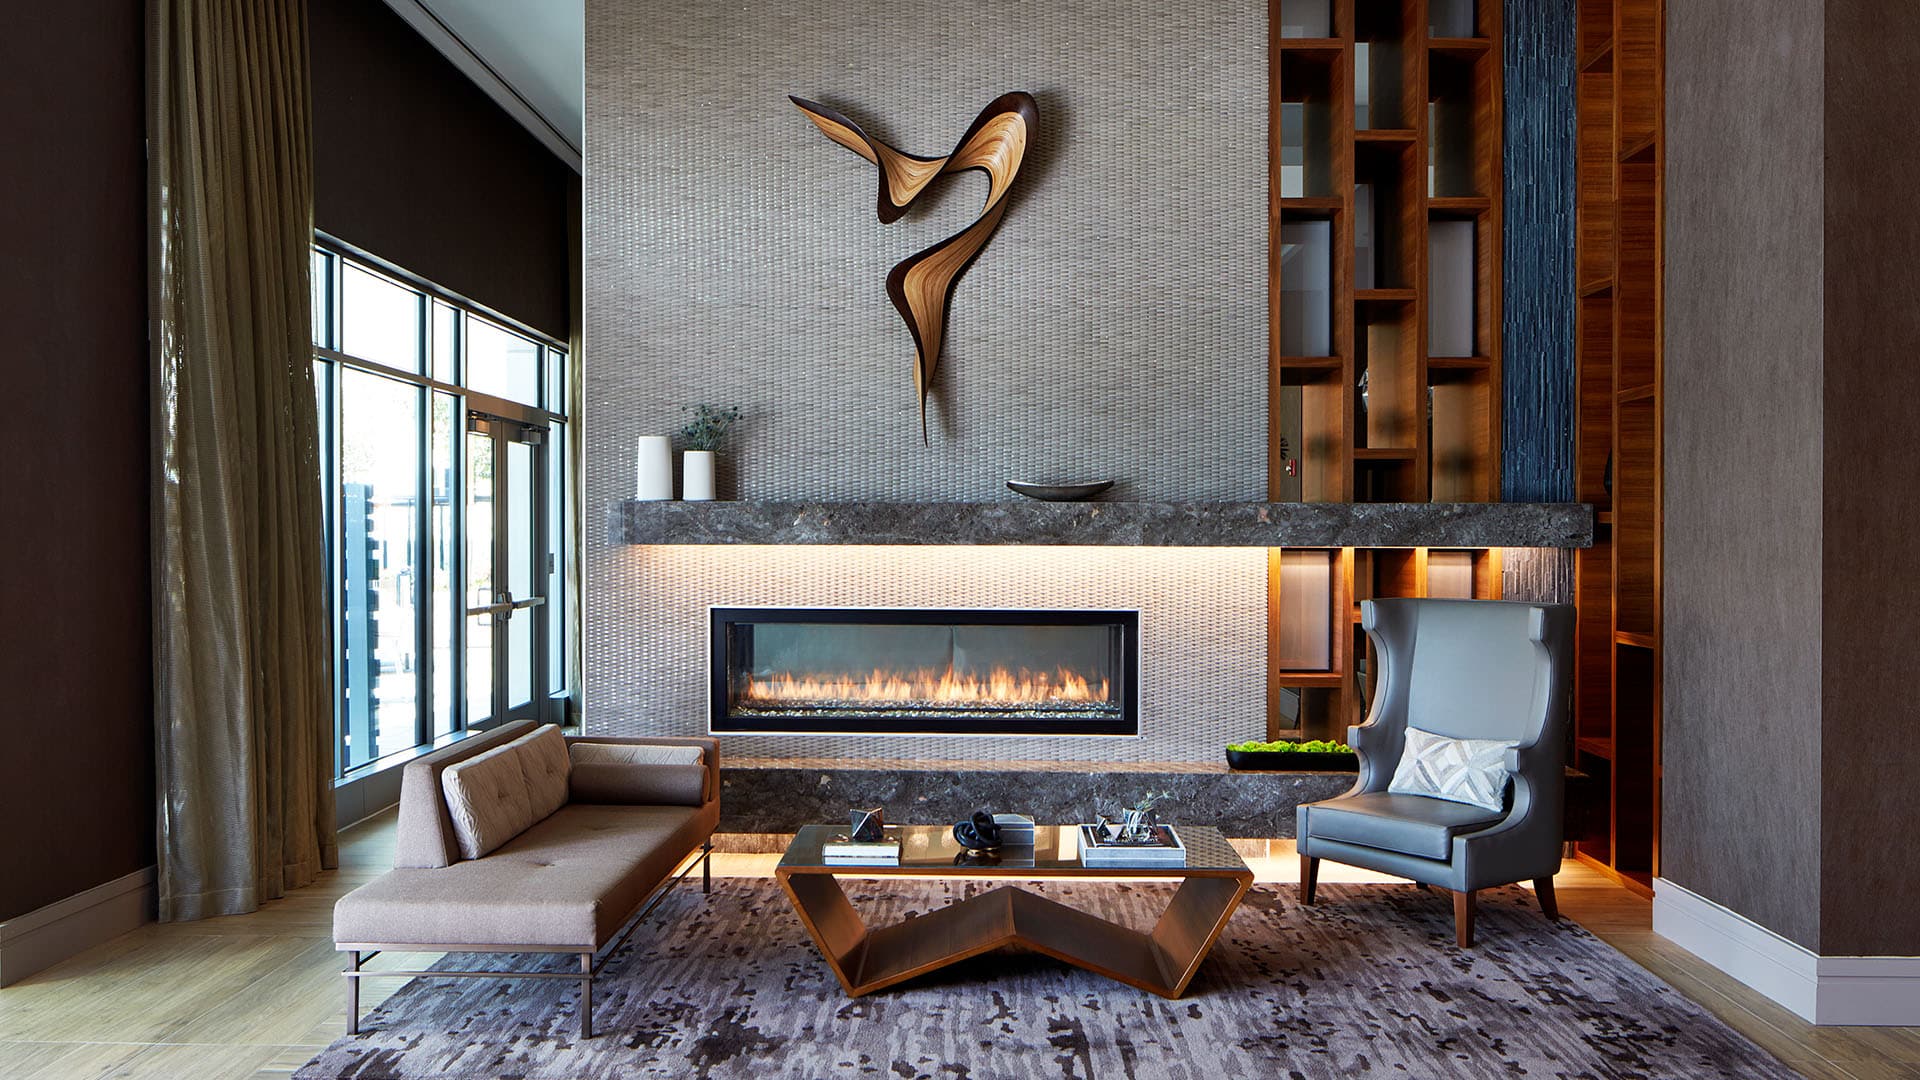 A hotel lobby fireplace in Atlanta, Georgia